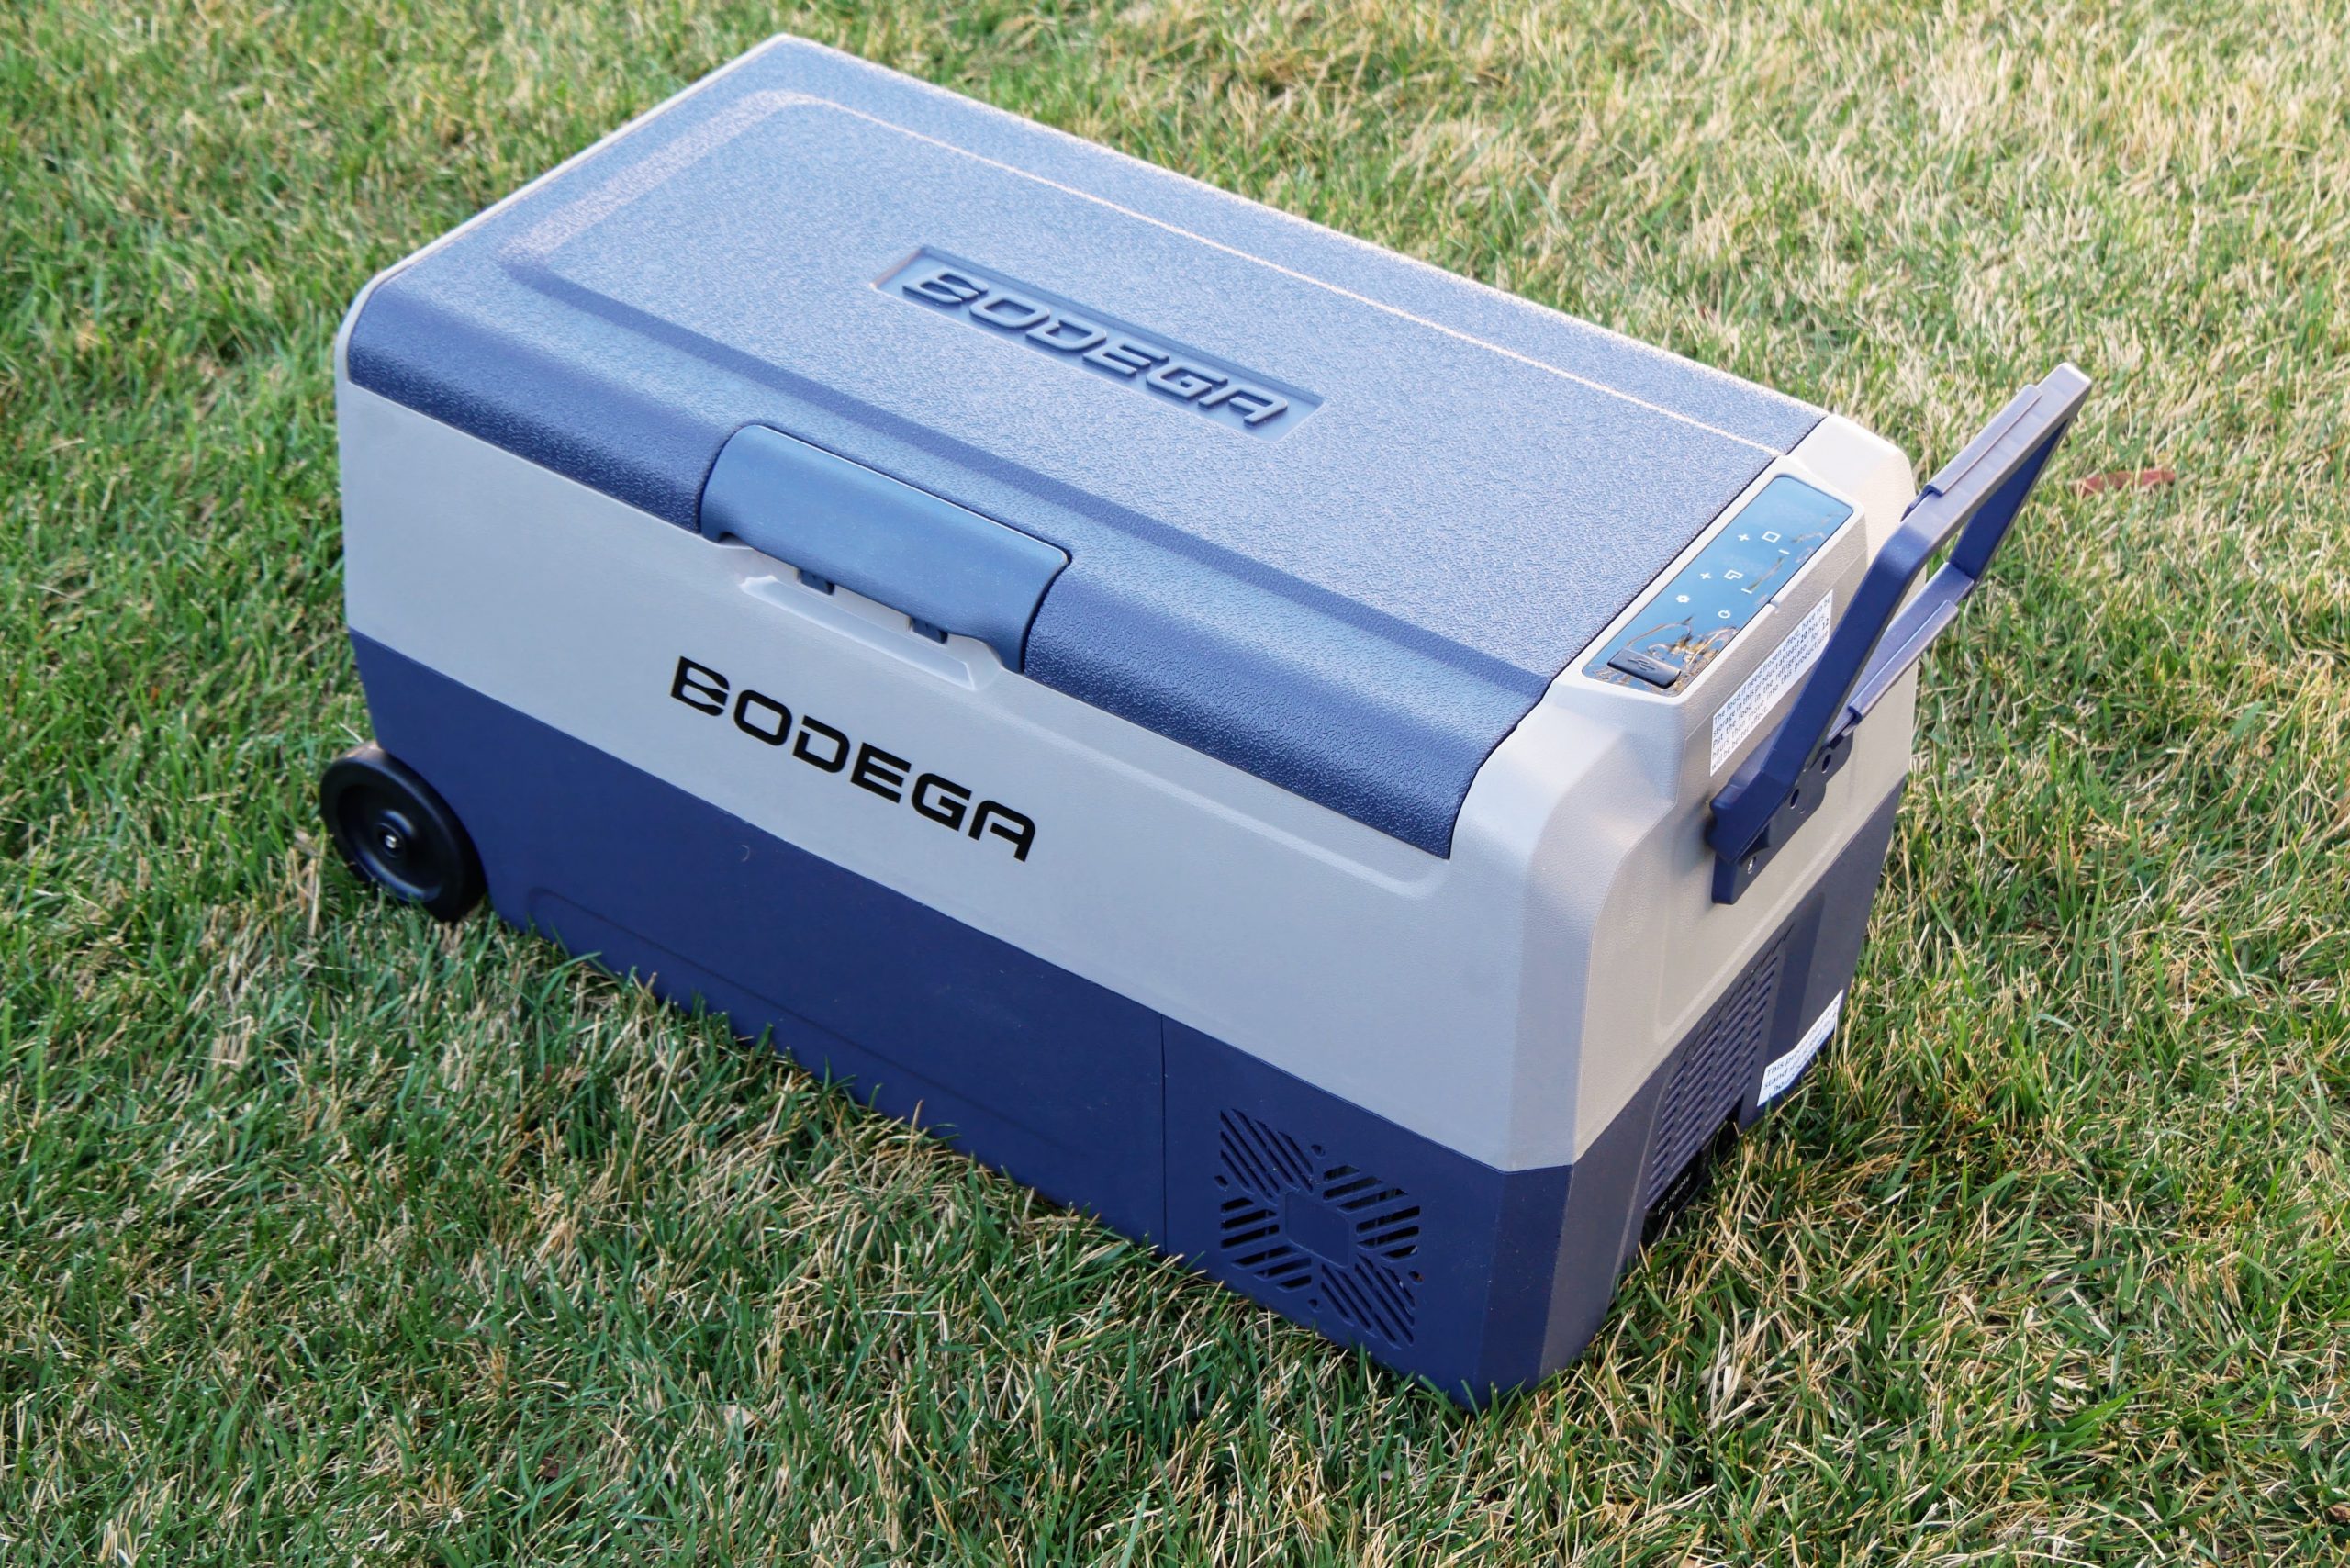 BODEGAcooler Accessories - Detachable Battery for 12v Portable Fridge